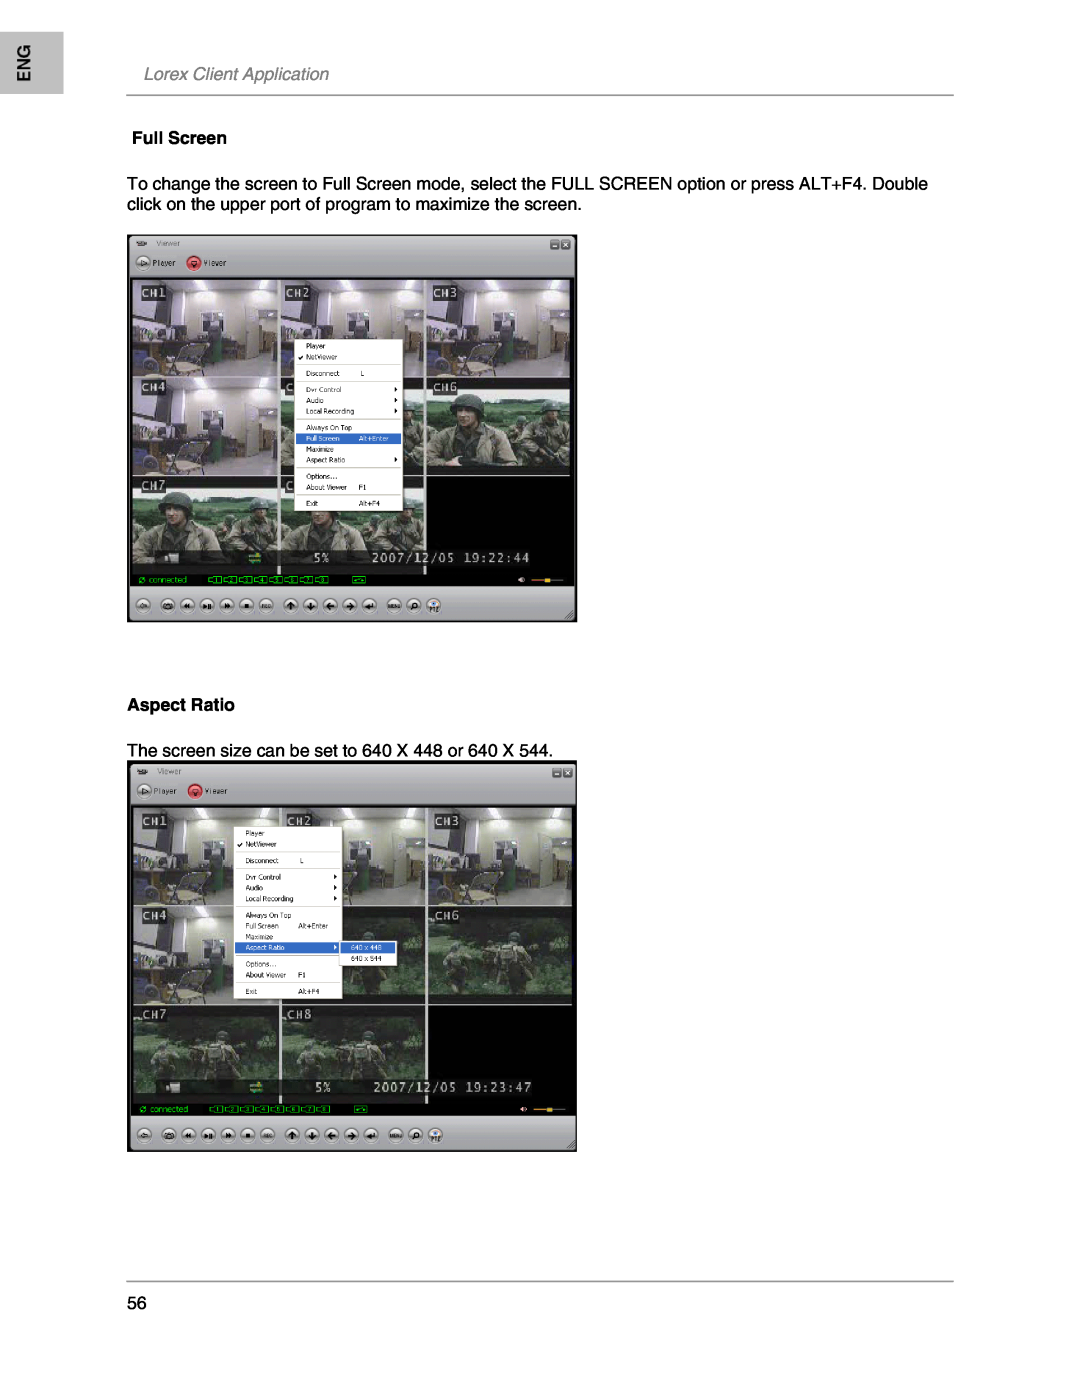 LOREX Technology L208, L204 instruction manual Lorex Client Application, Full Screen, Aspect Ratio 